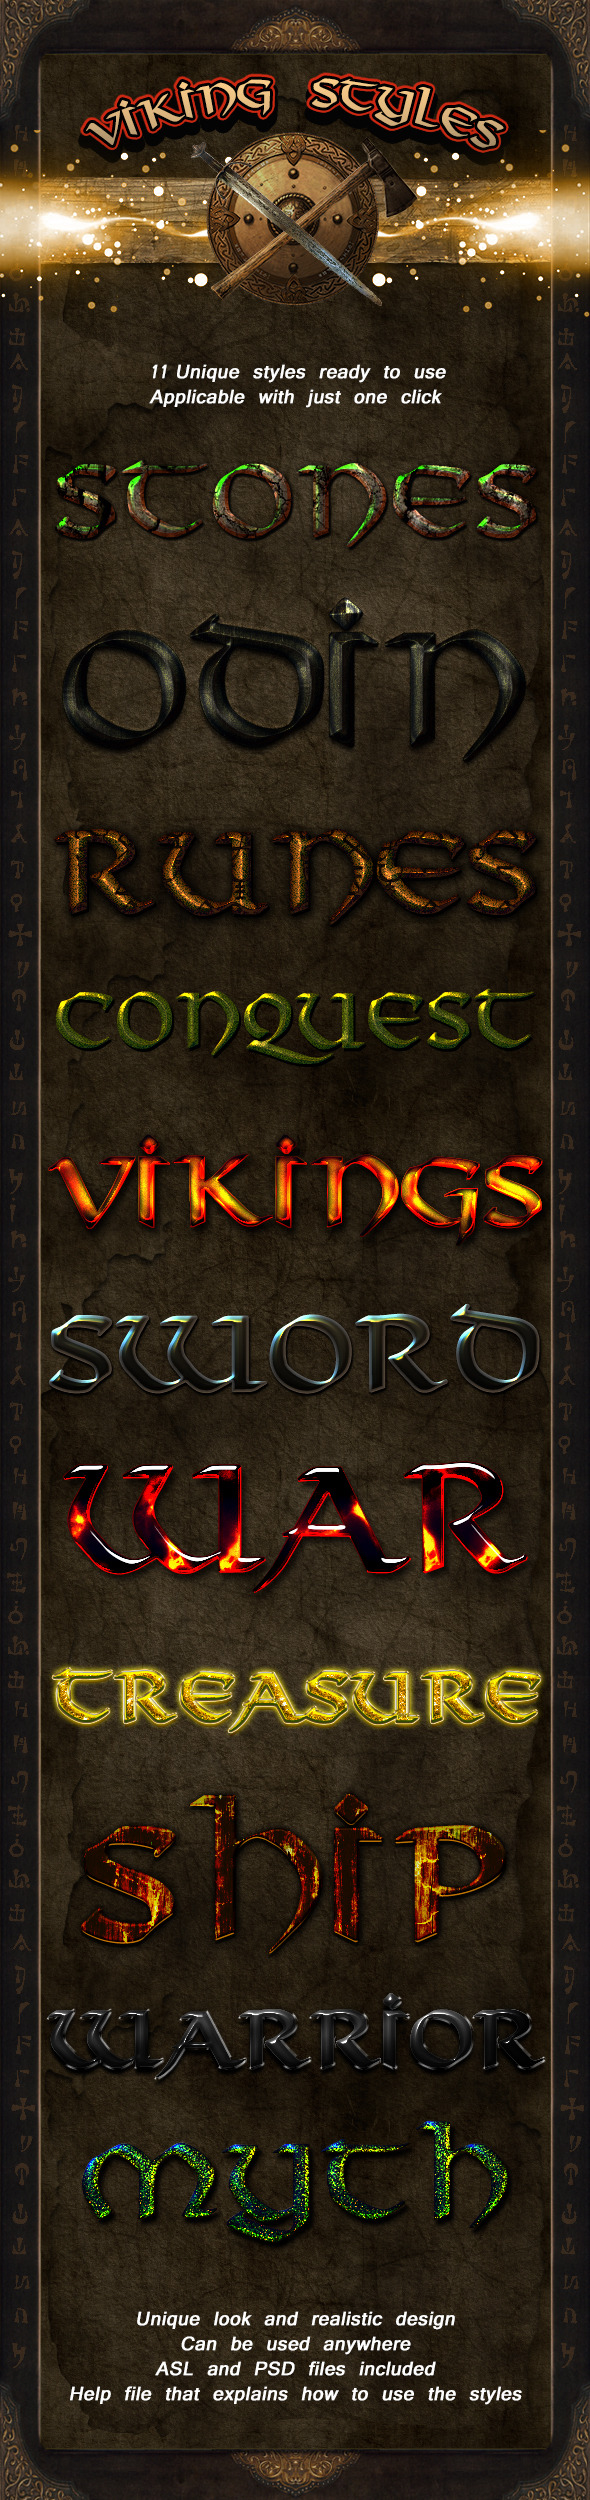 Viking Styles